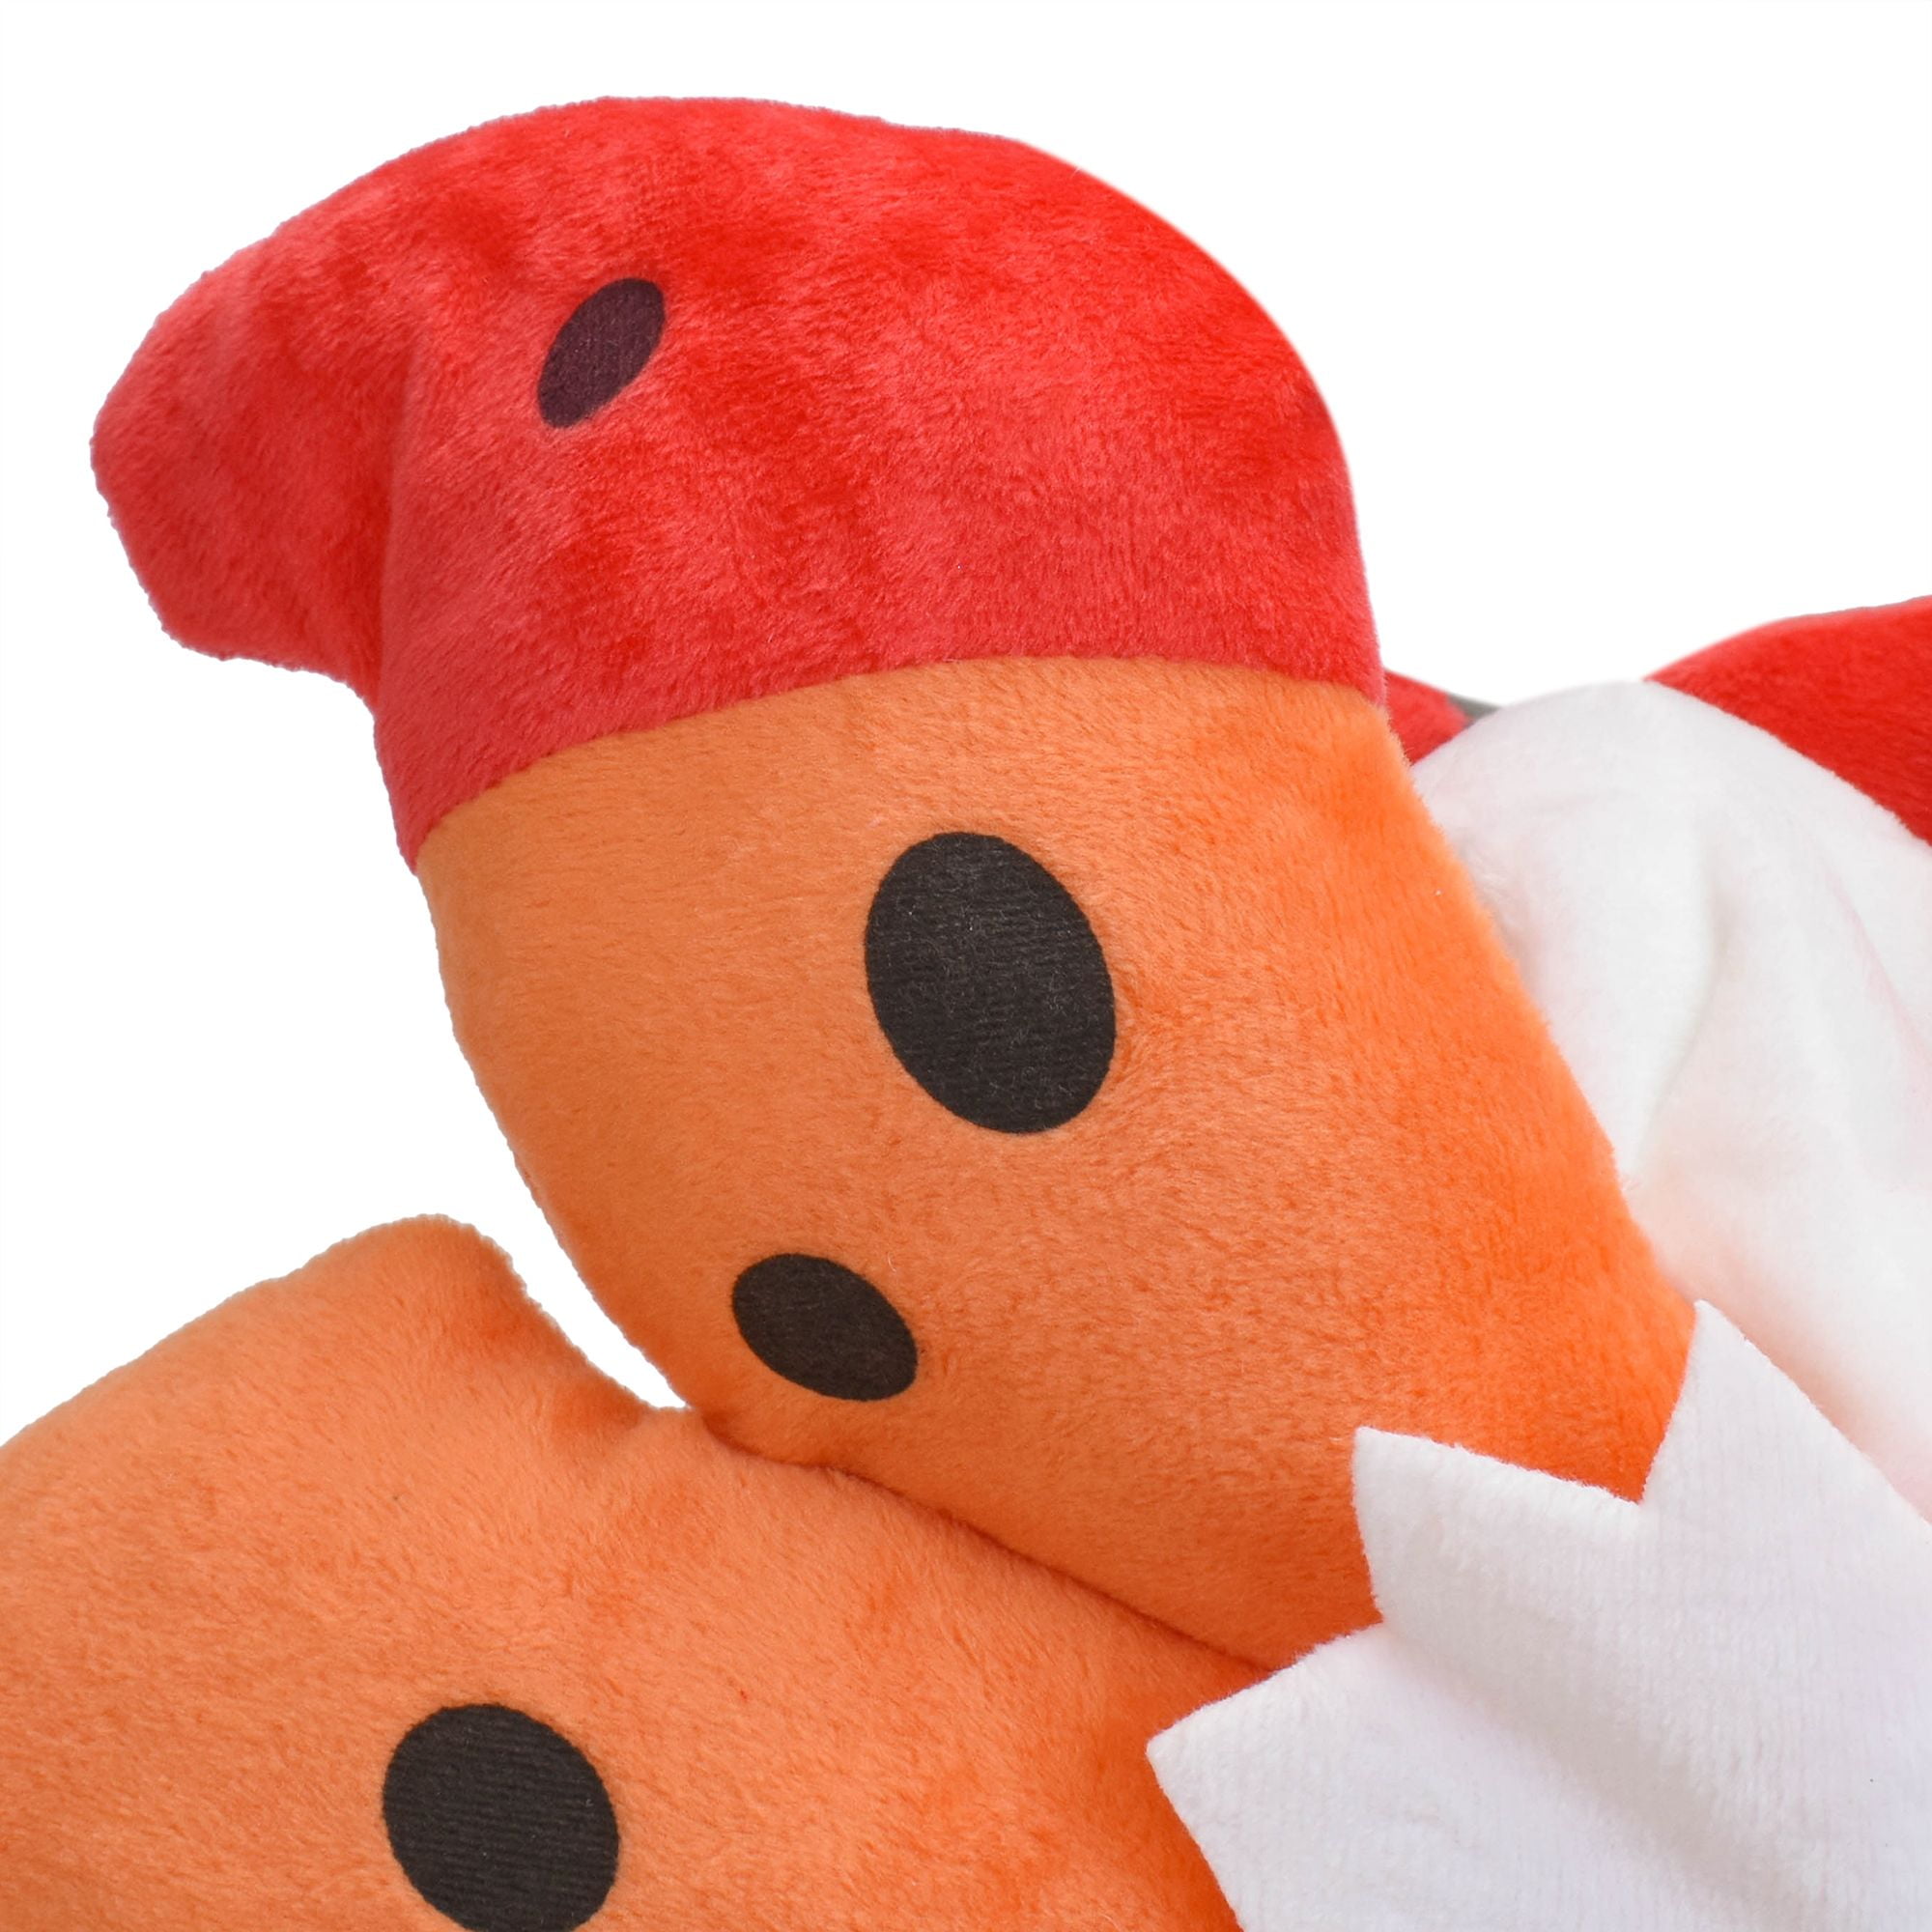 Chiue Plush Shiny Solgαleo 10.6 Stuffed Animal Doll Plush Toys Gift for  Kids Age 3+ 